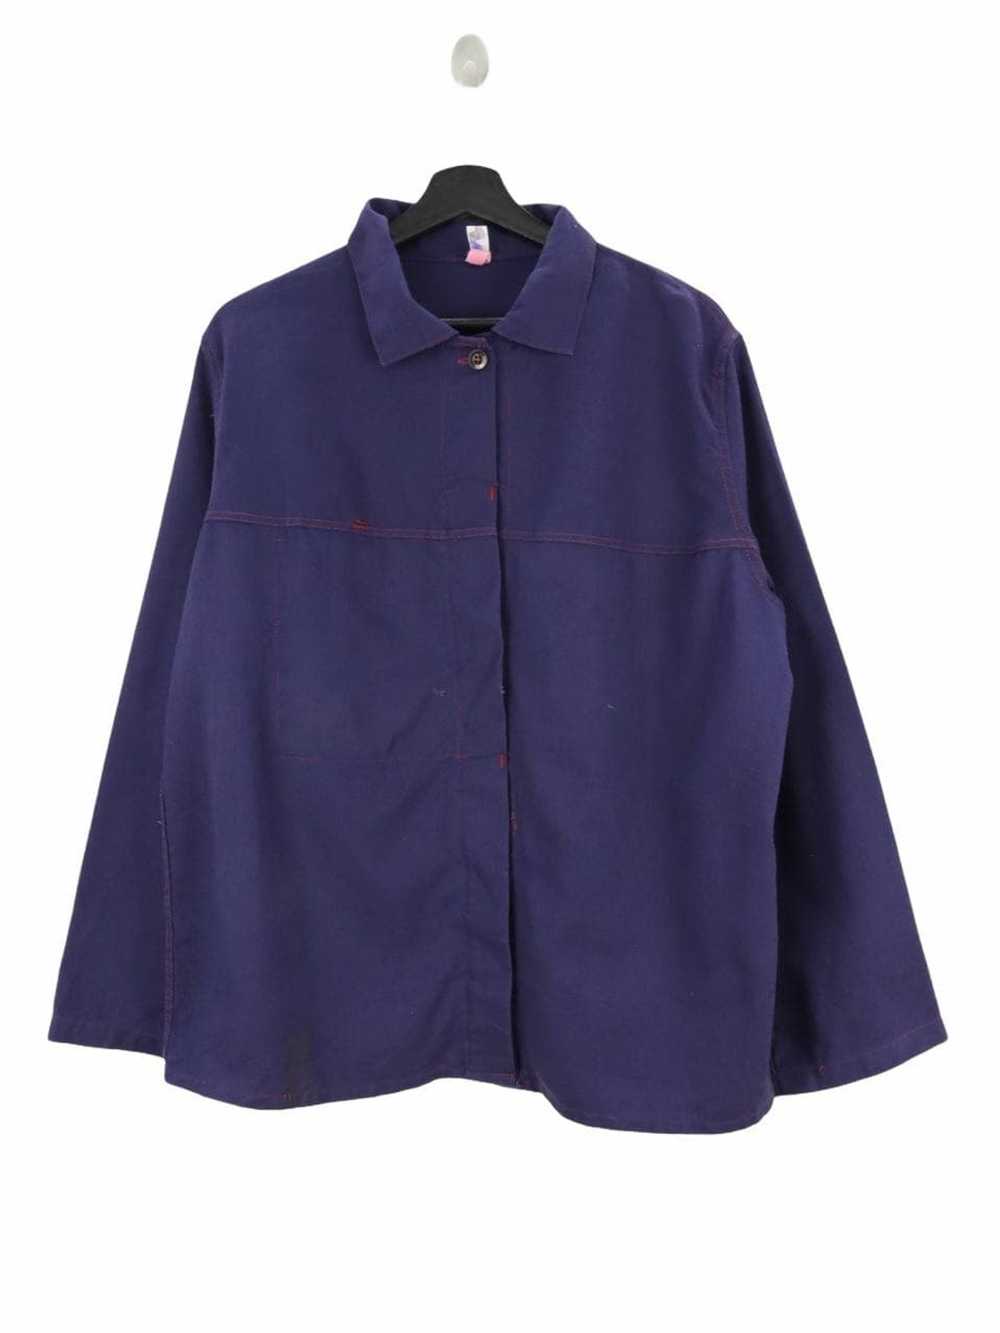 Vintage × Workers Vintage French Workwear Jacket - image 2